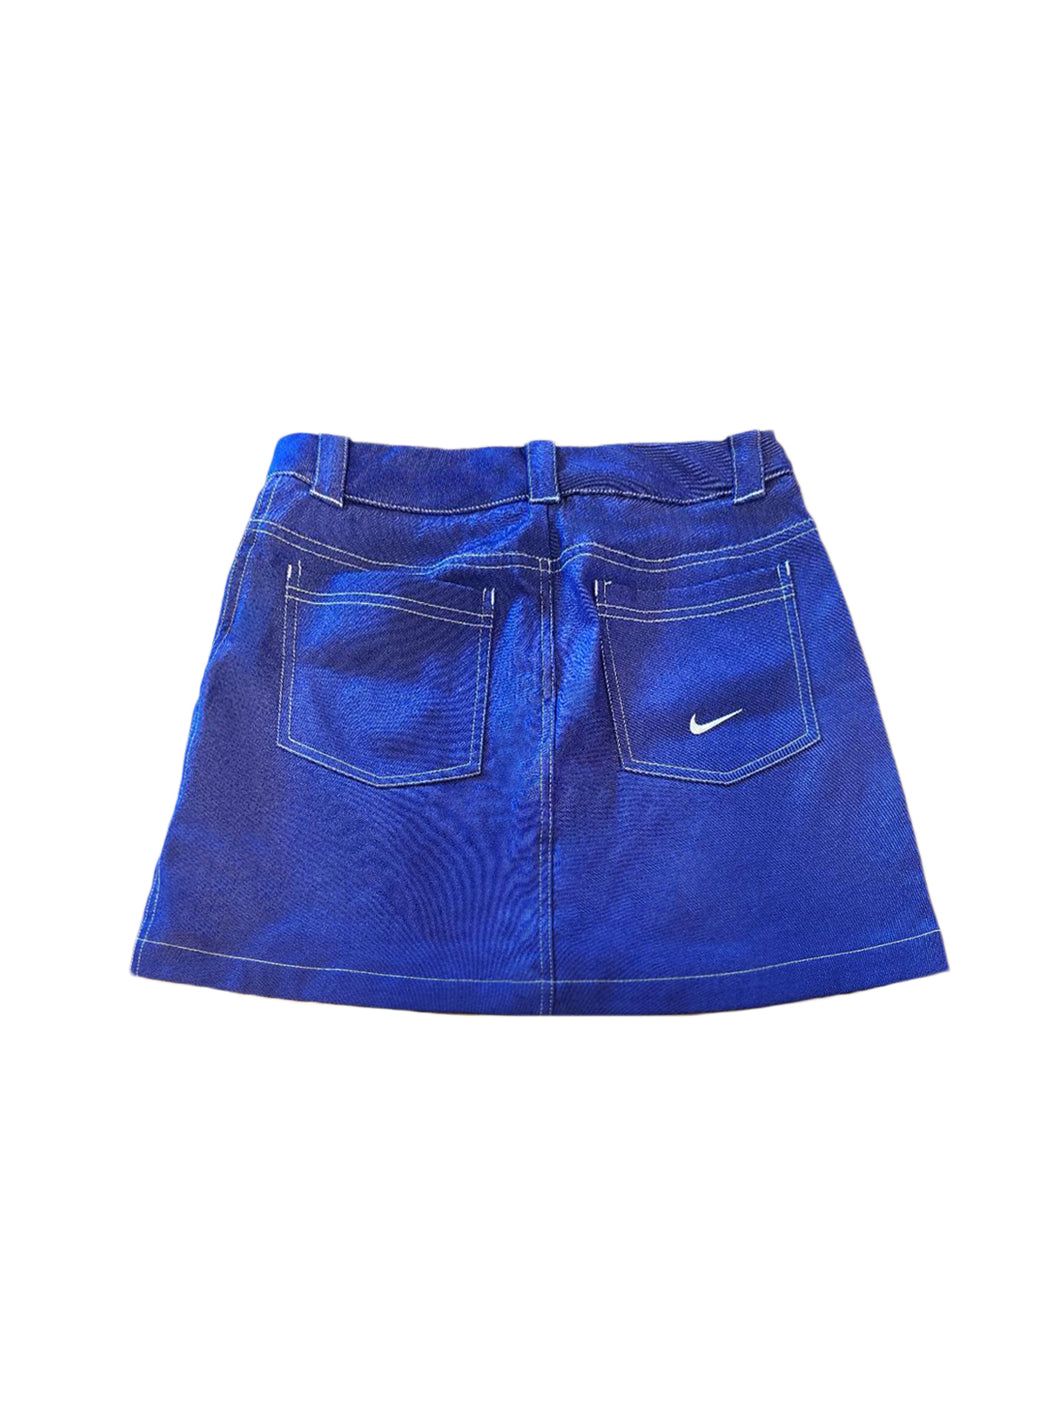 Nike Golf Blue Denim Skirt